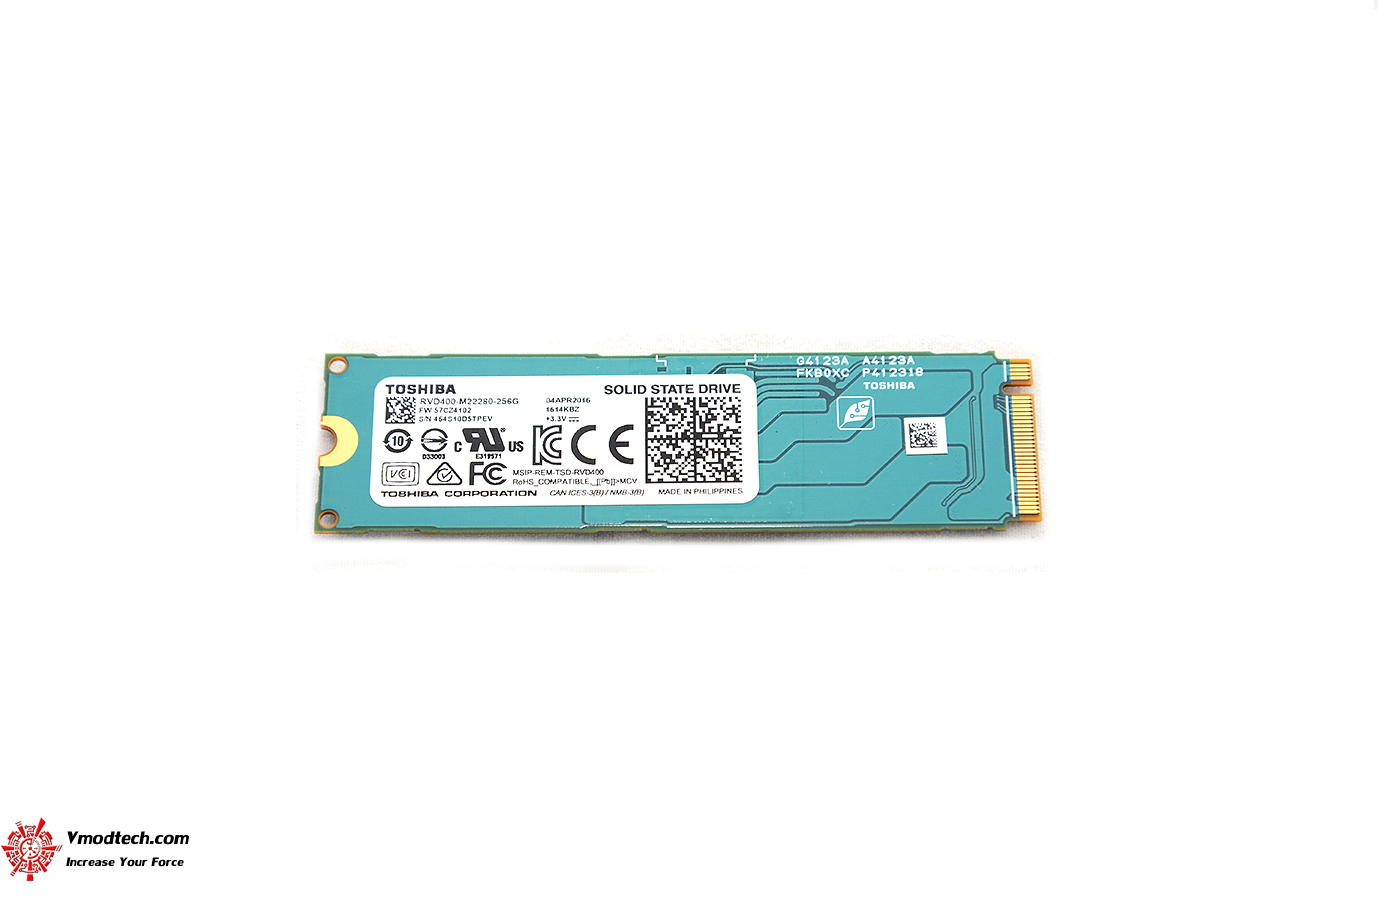 dsc 1872 Toshiba OCZ RD400 PCIe NVME SSD 256GB Review 